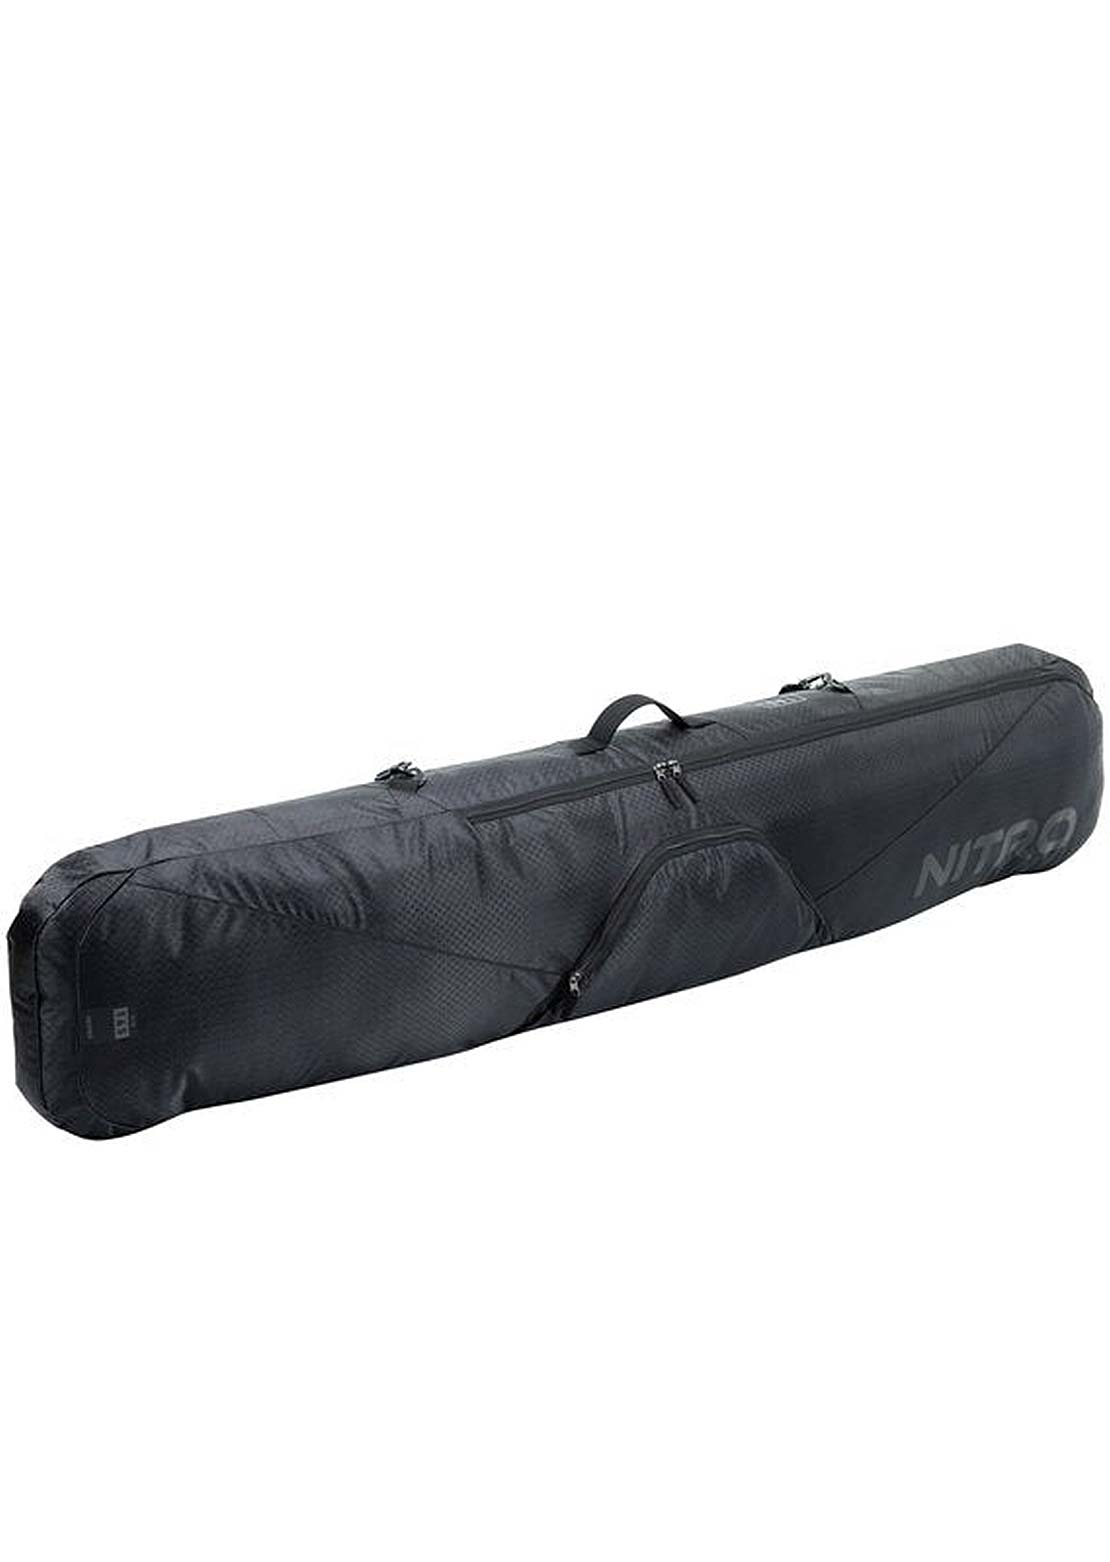 Nitro Sub Snowboard Bag 165 cm Phantom